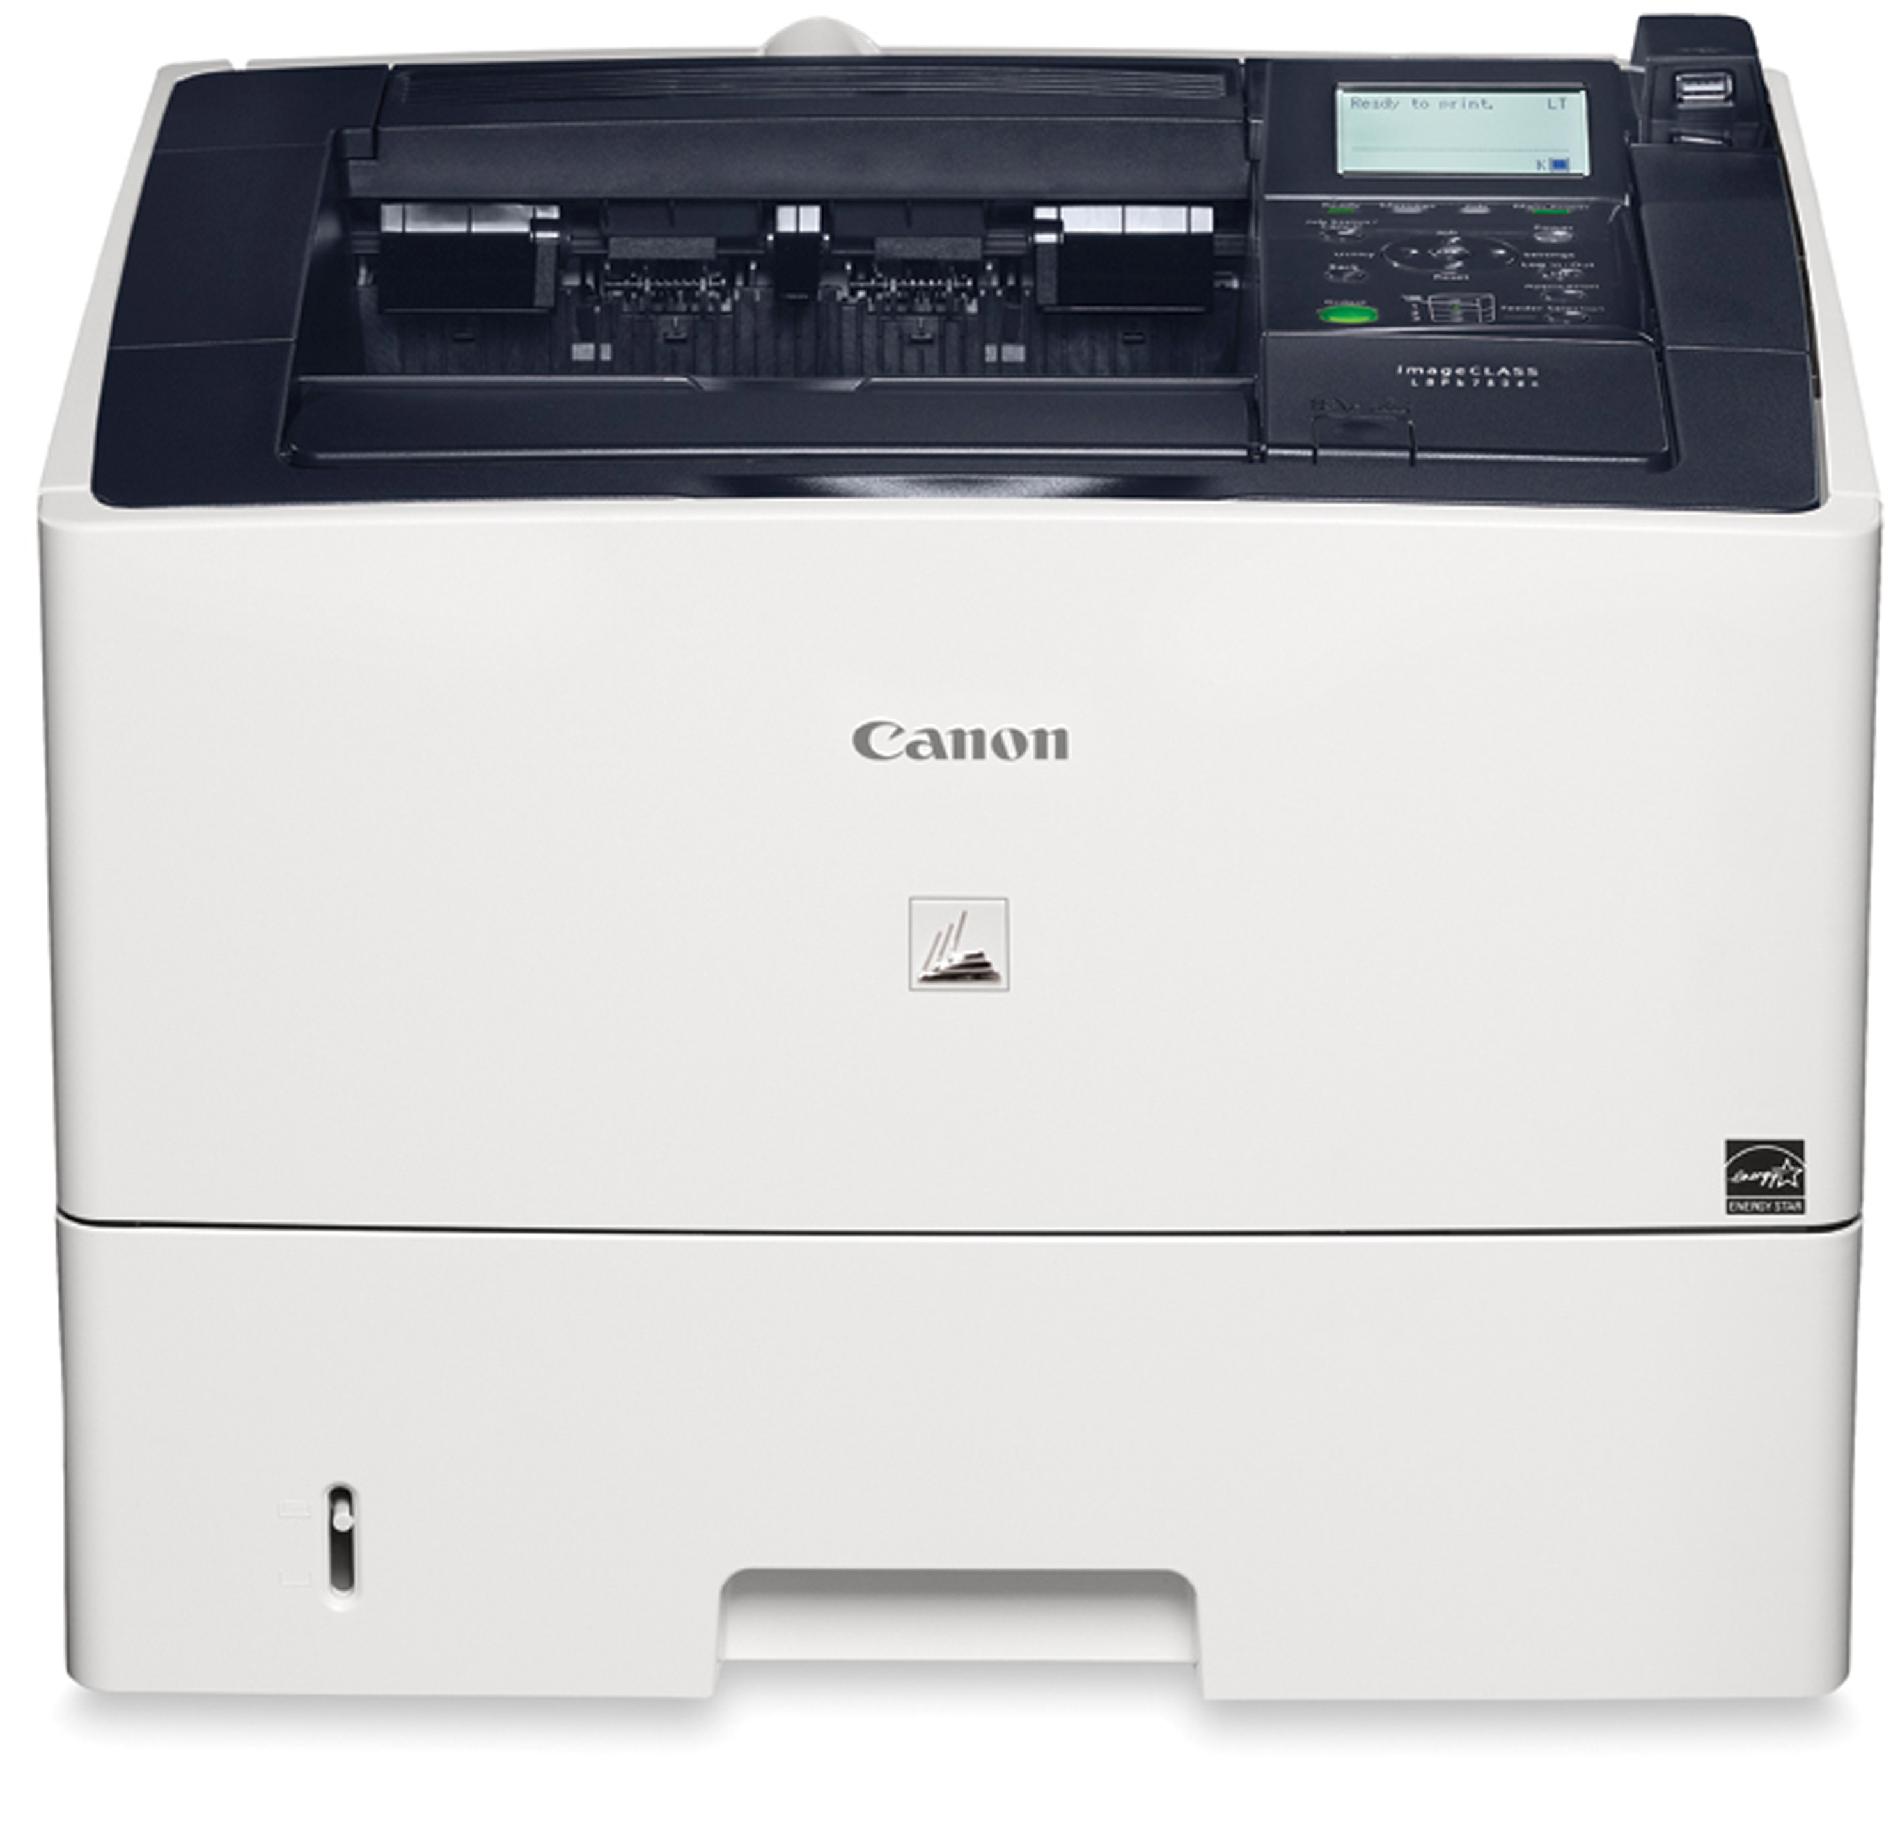 Canon LBP-7780 imageCLASS Color Laser Printer